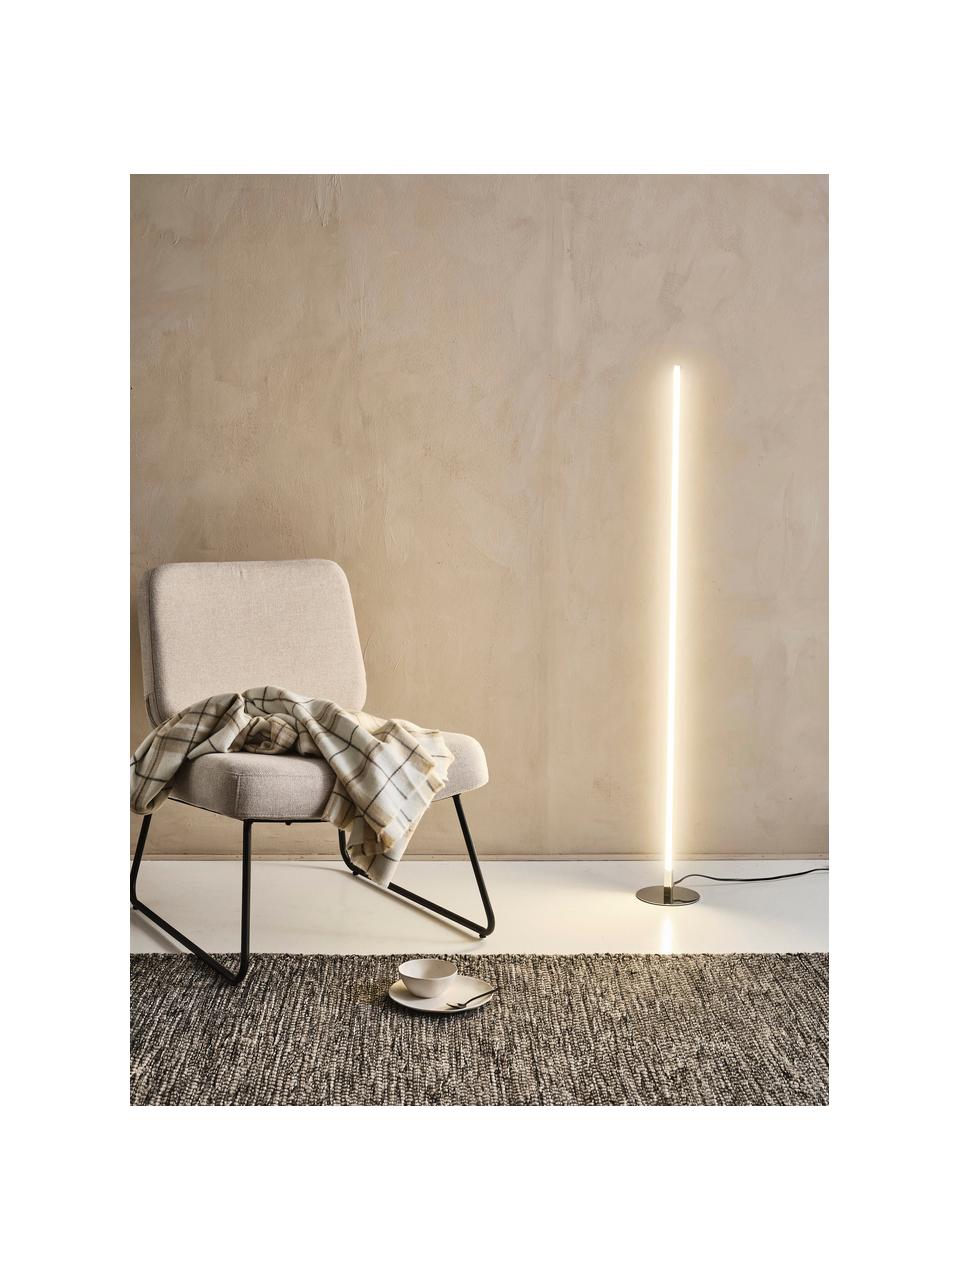 Kleine dimbare LED vloerlamp Whisper in zilverkleur, Zilverkleurig, Ø 15 x H 125 cm